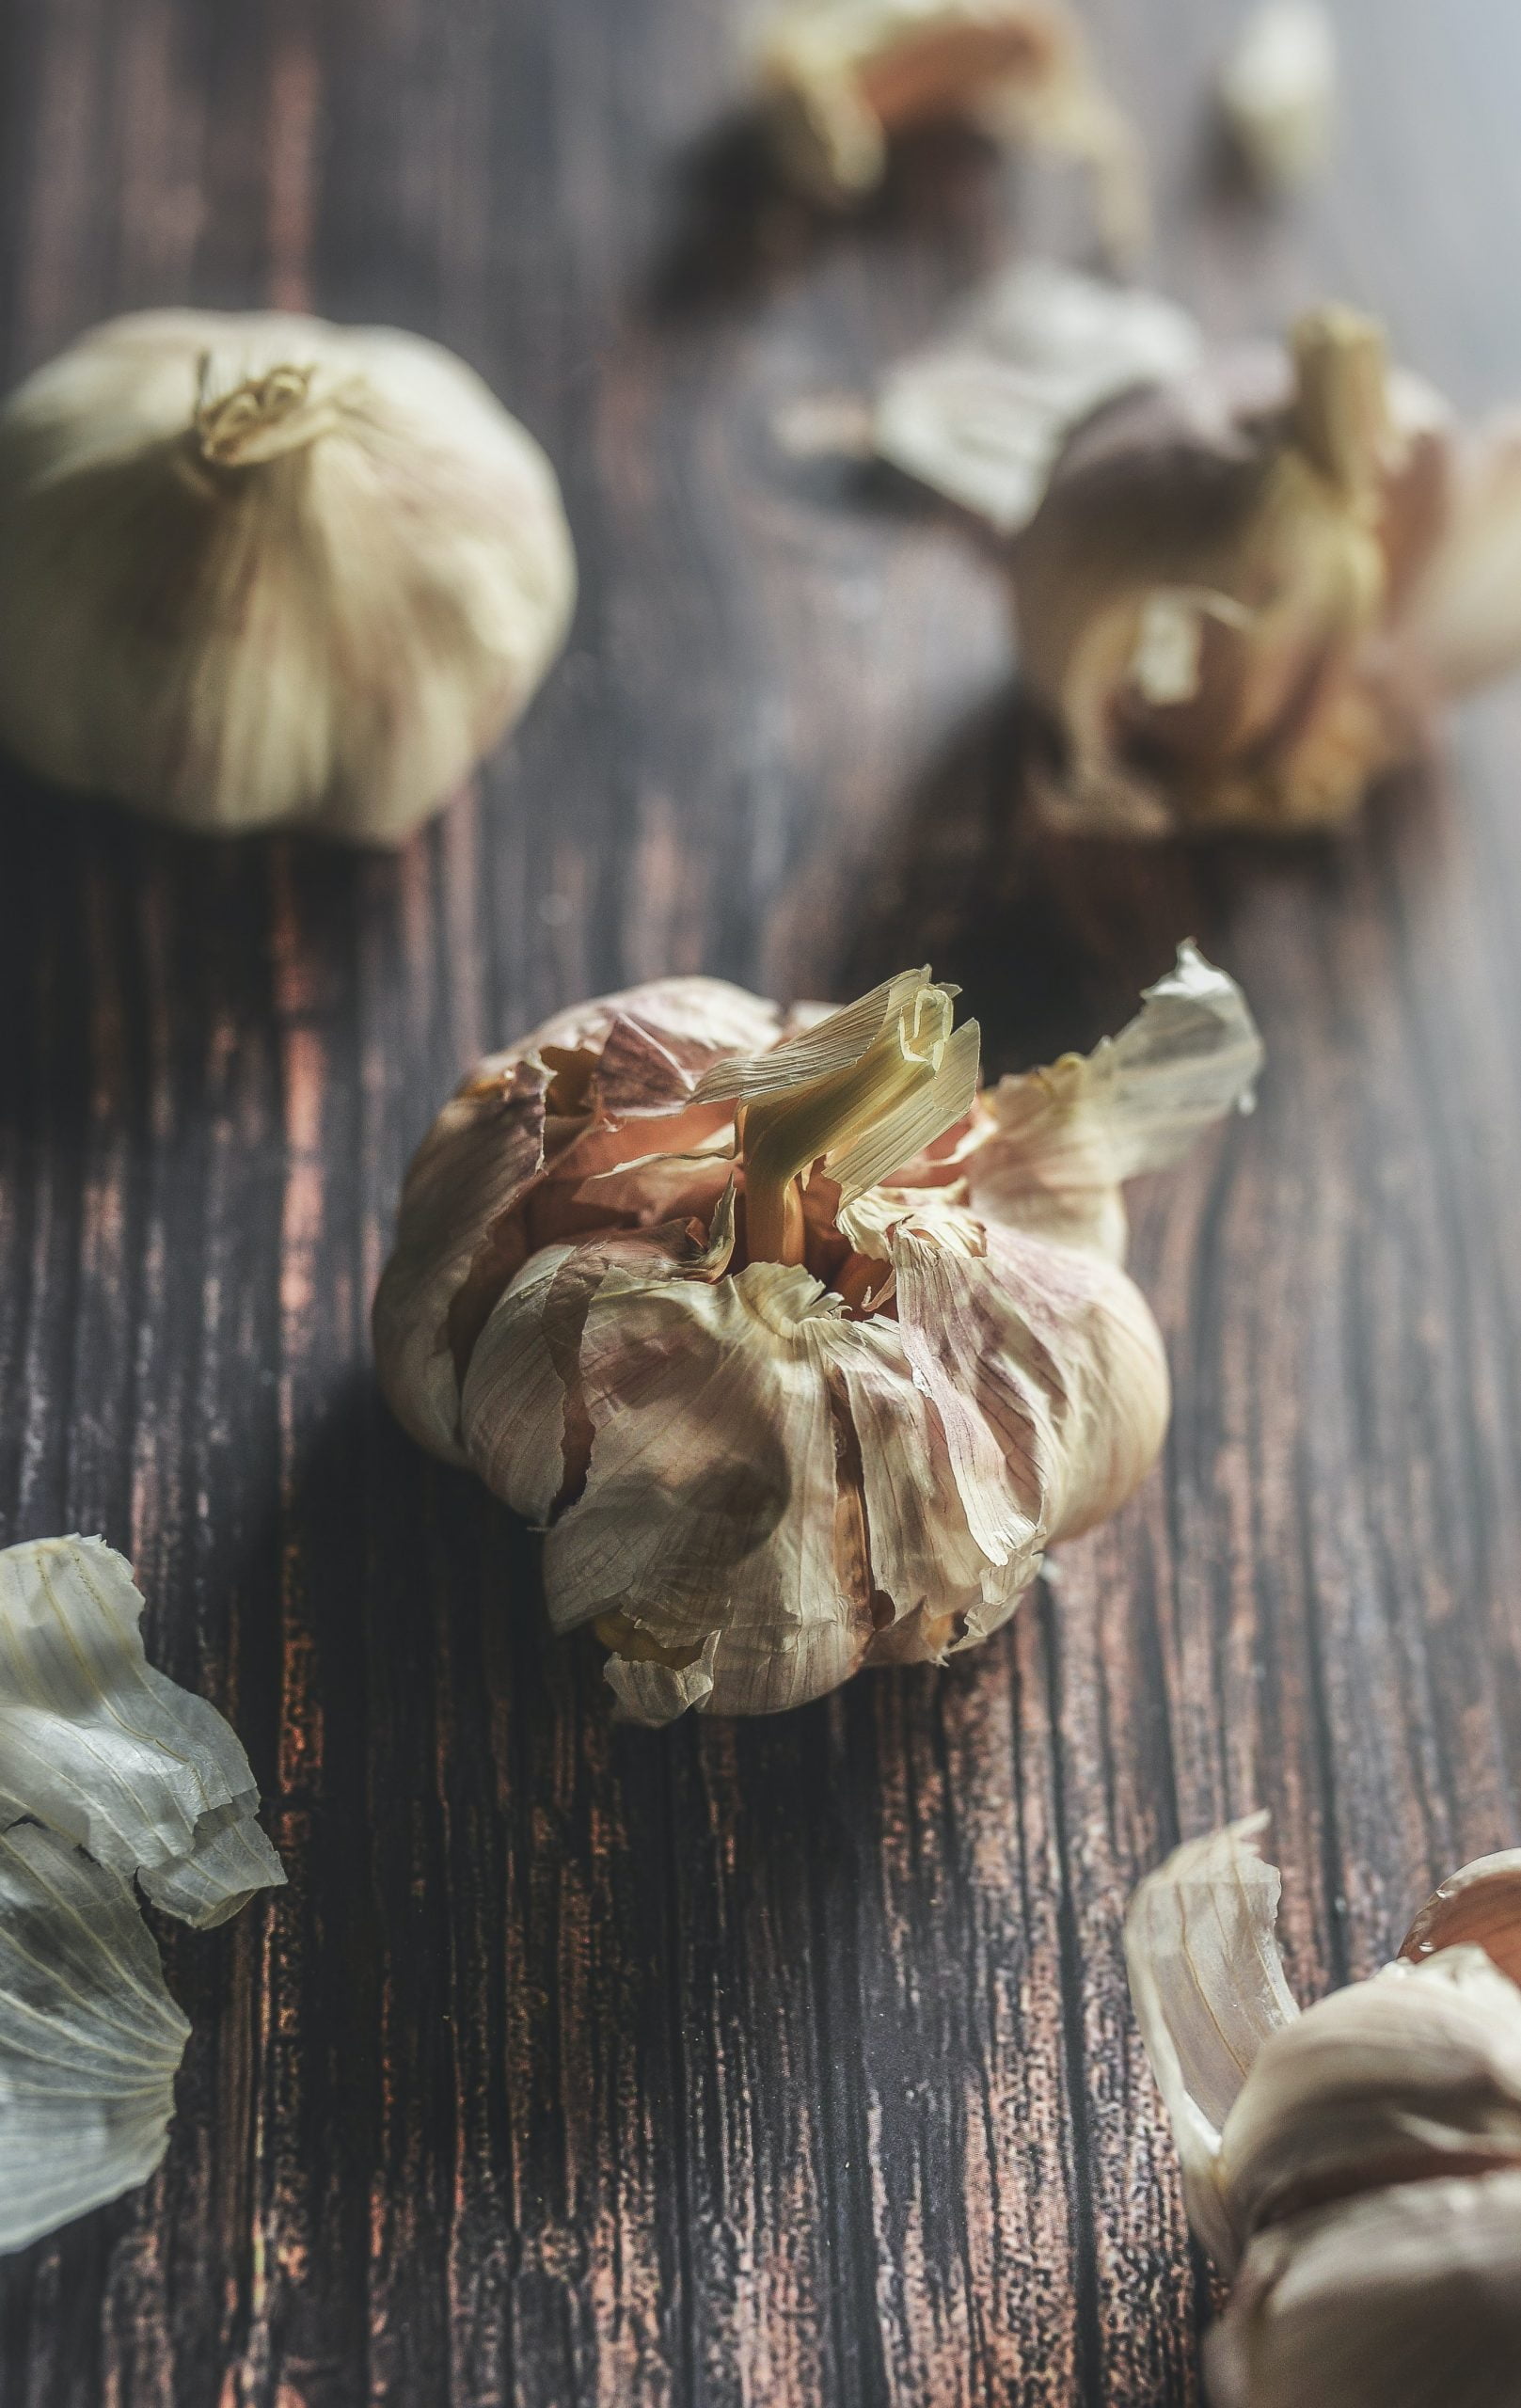 How Many Garlic Bulbs Can You Grow From One Bulb?